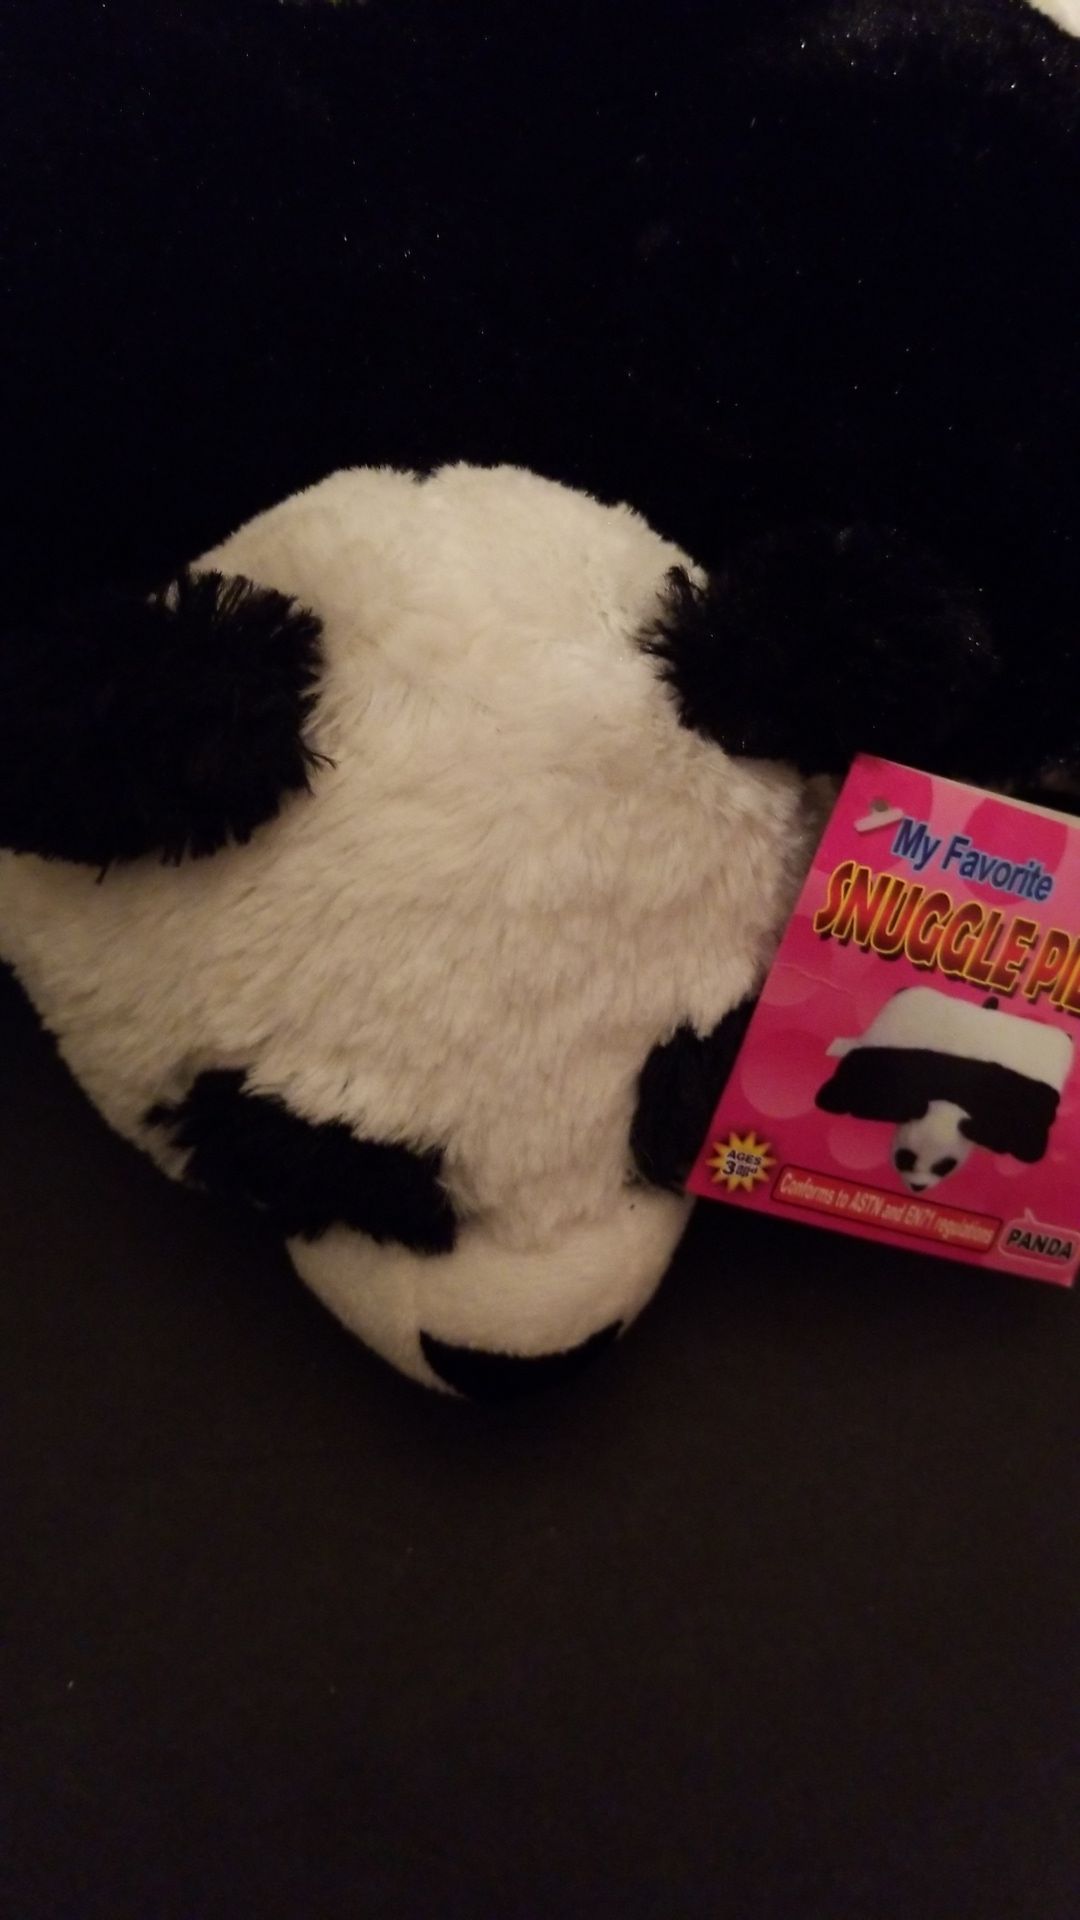 Snuggle pillow panda